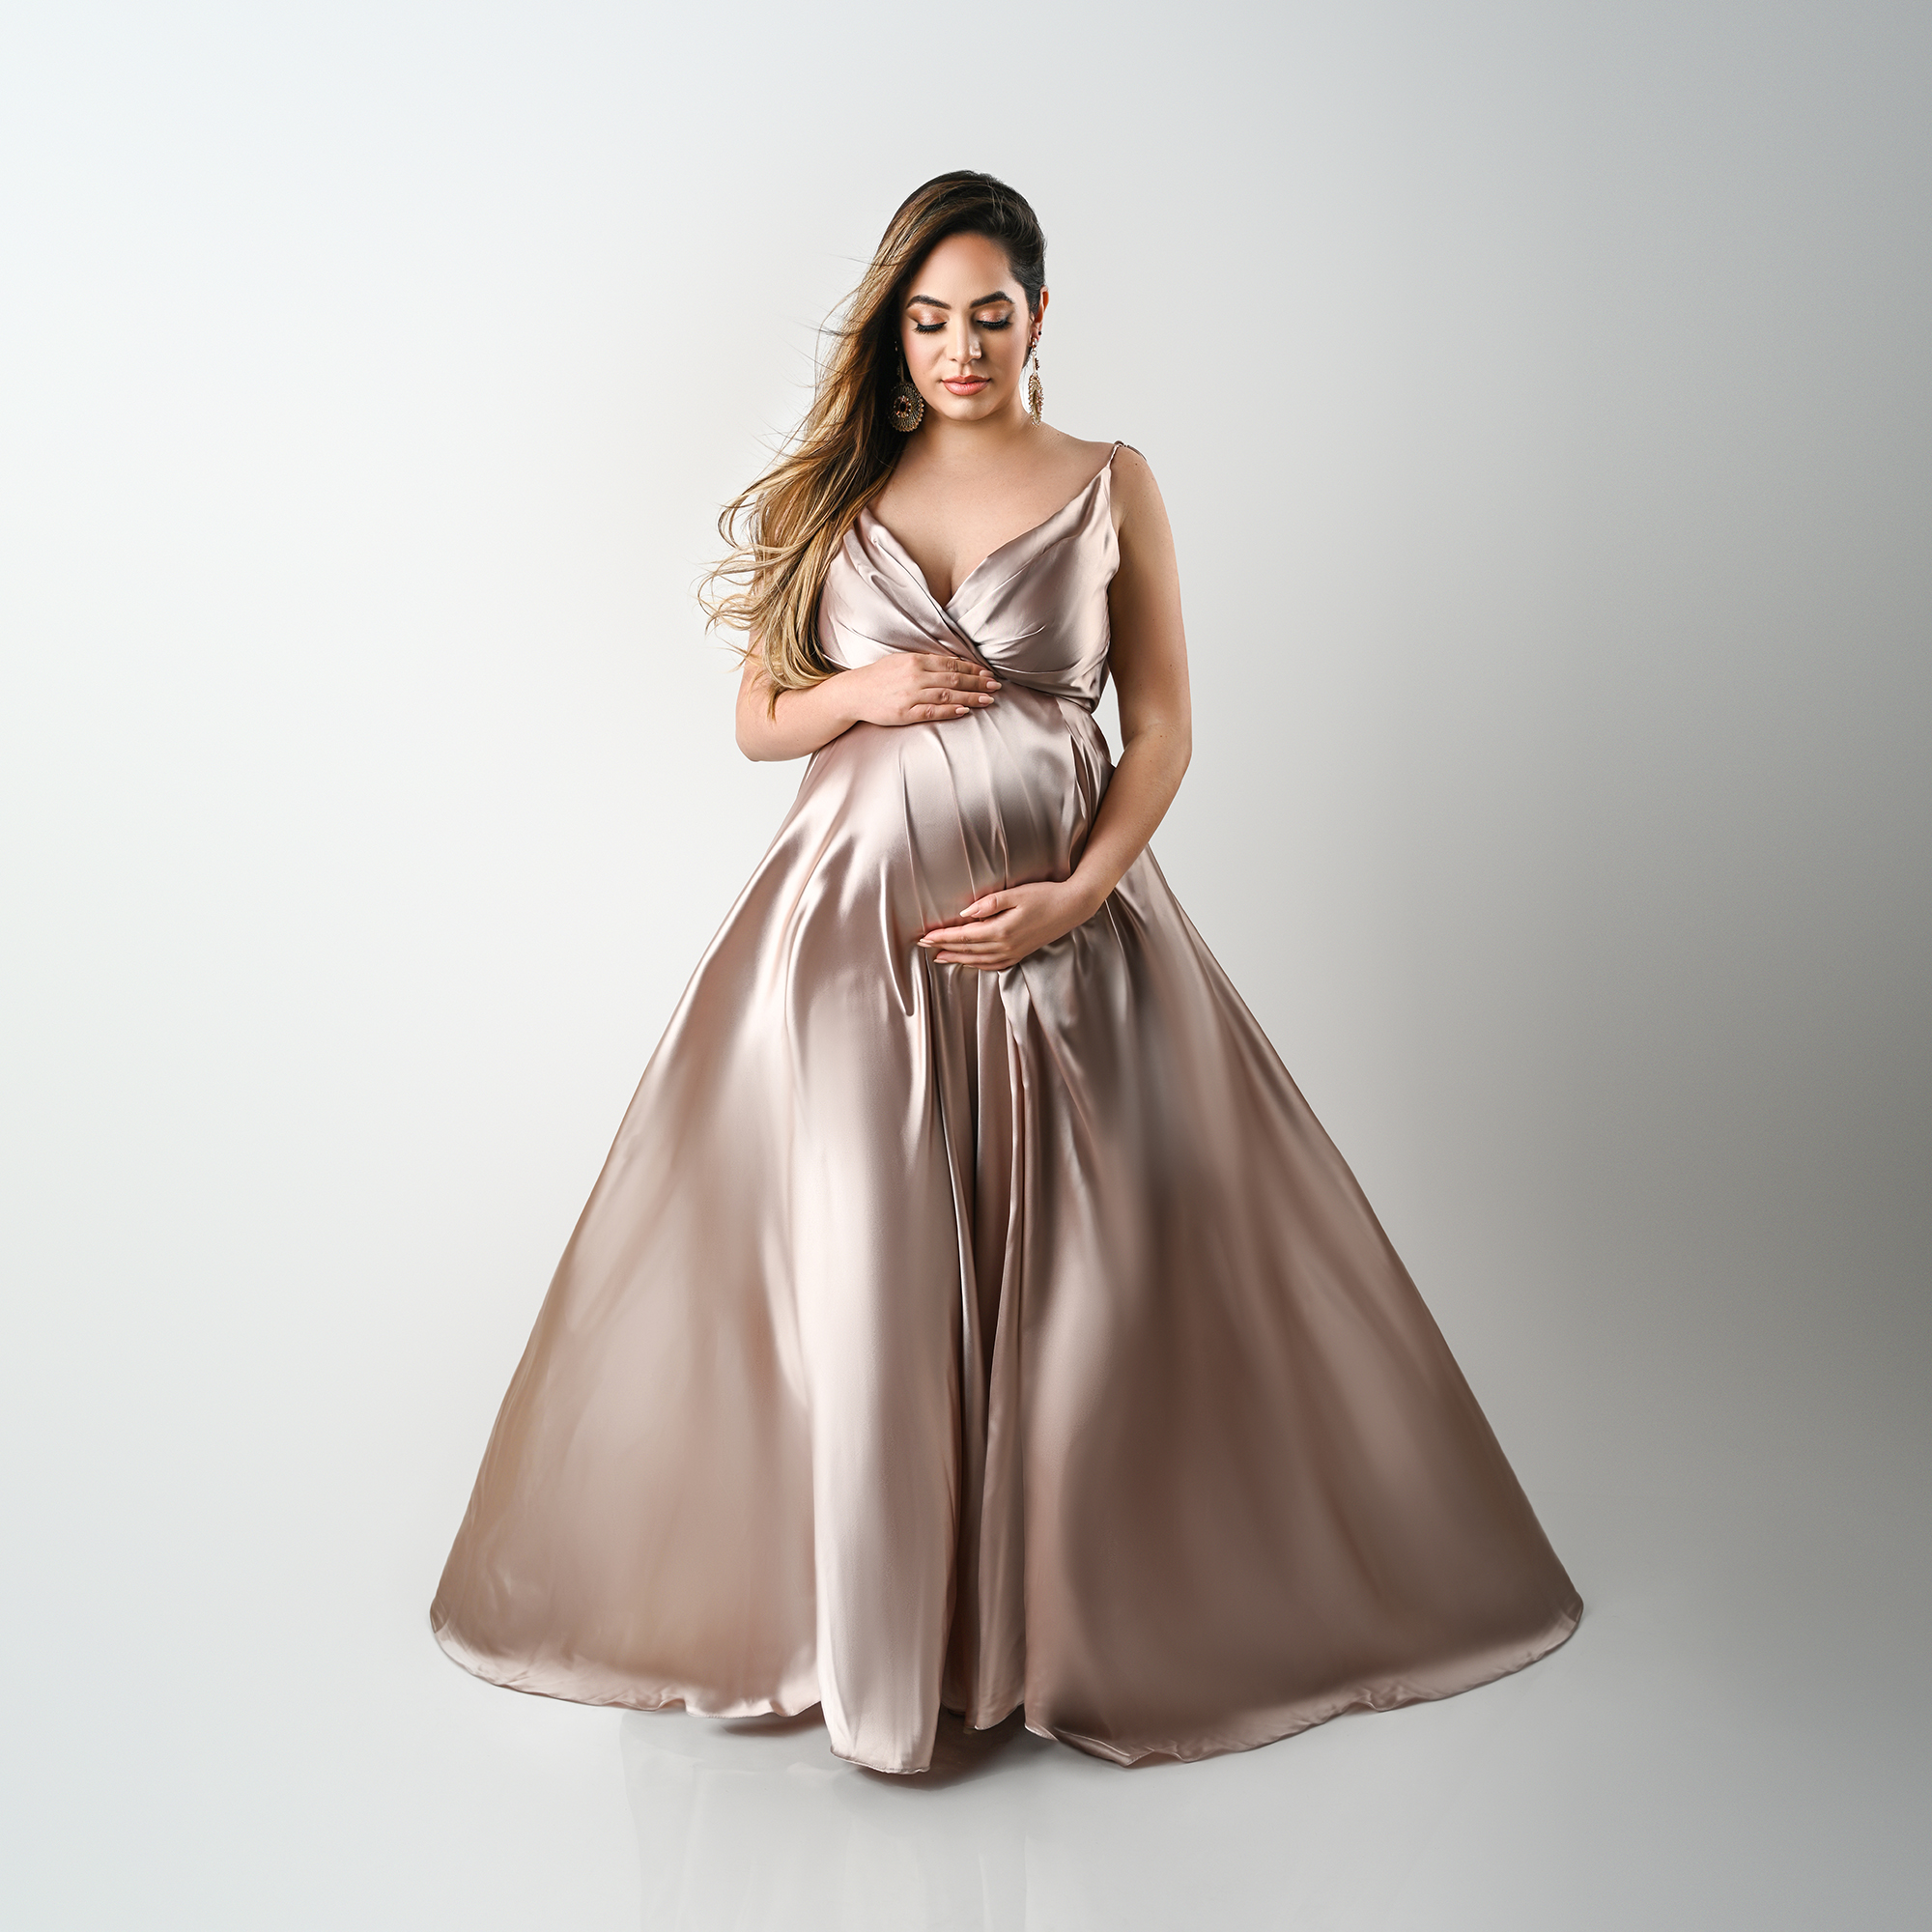 Fashion Maternity Photography in Miami 